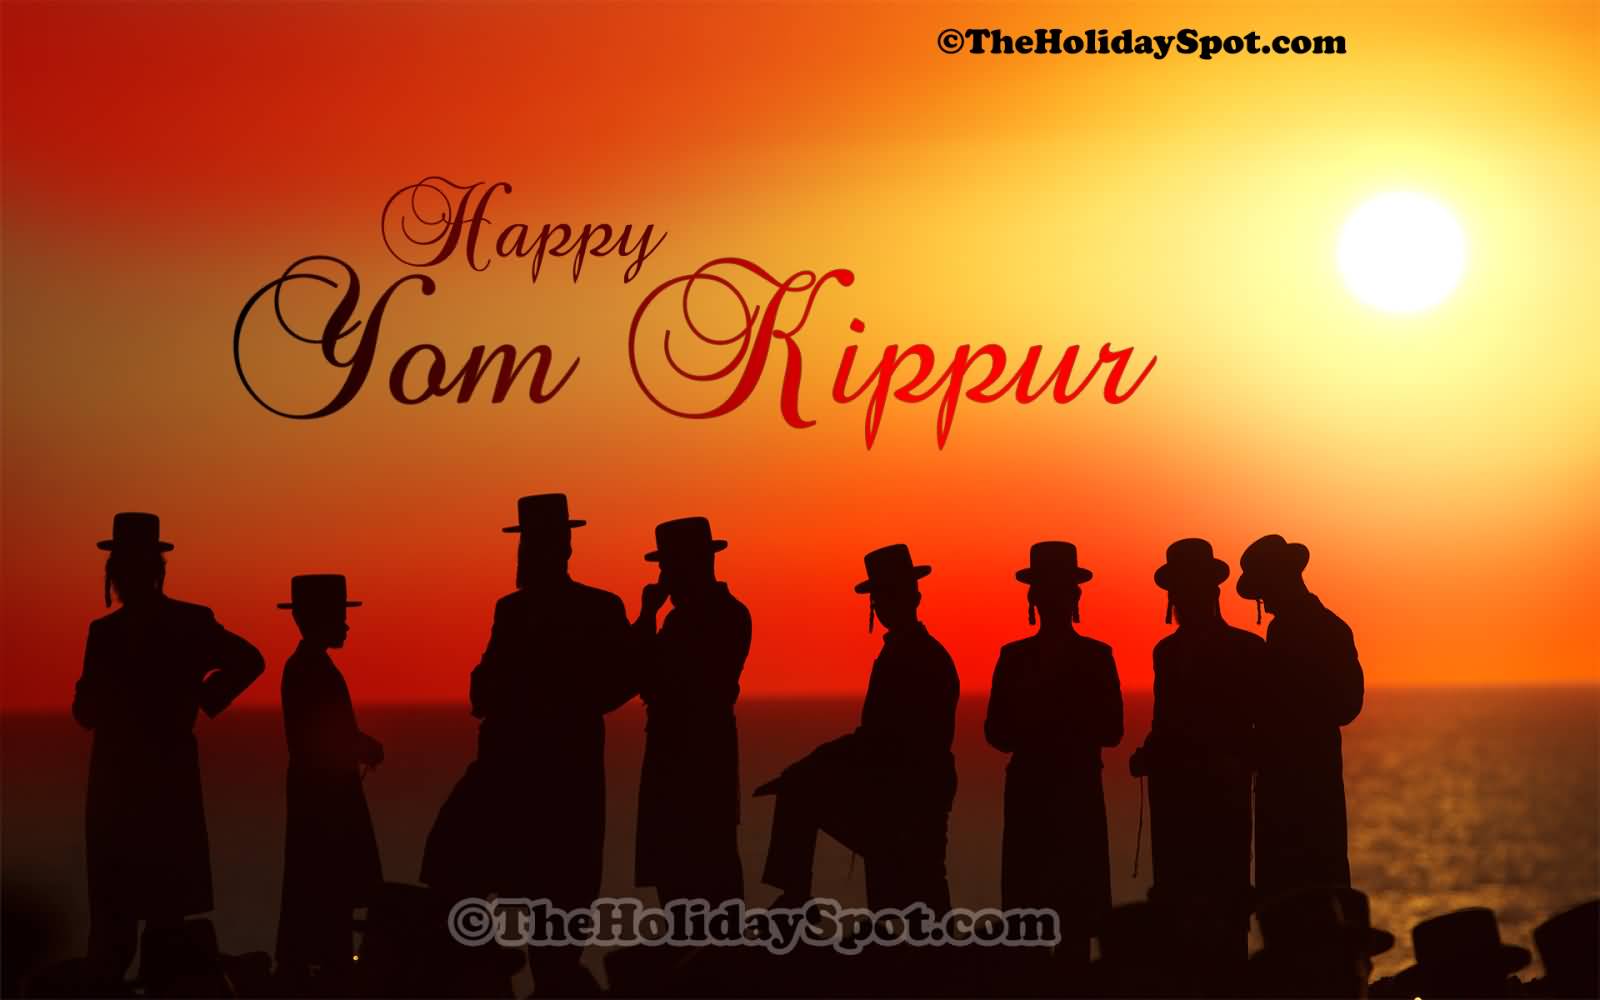 Happy Yom Kippur Greeting Image